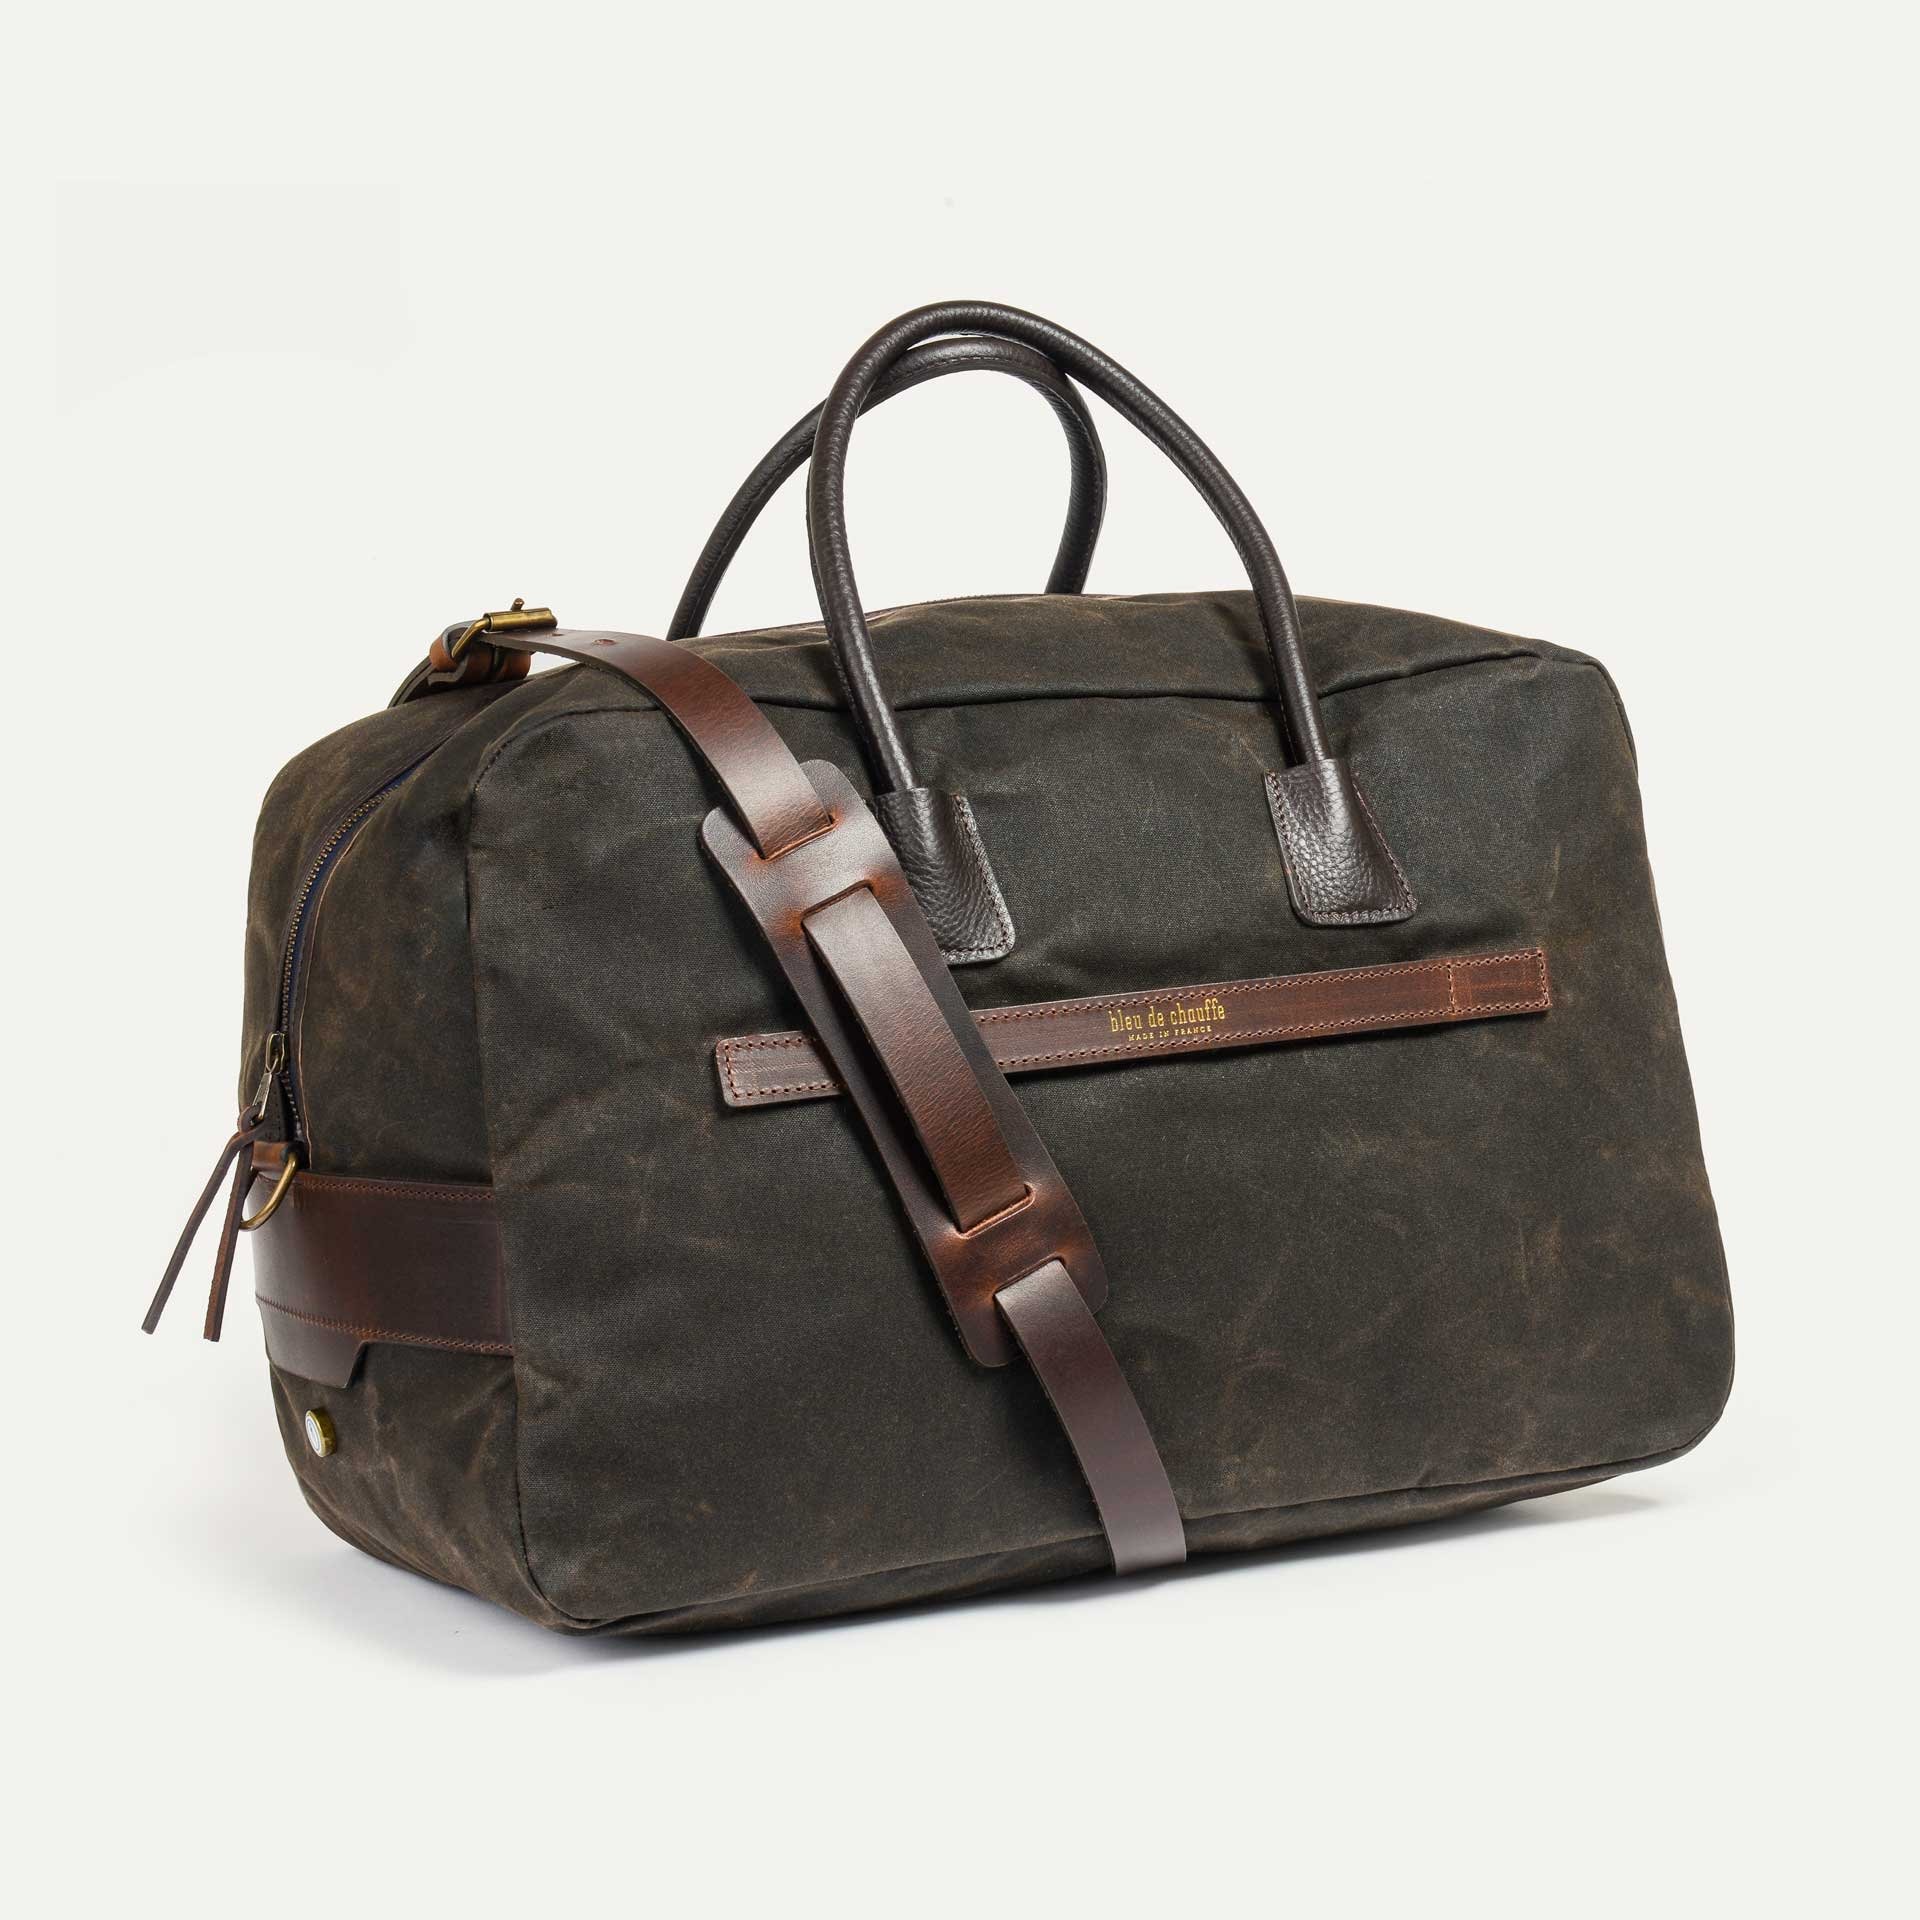 Zephir travel bag - Khaki waxed (image n°2)